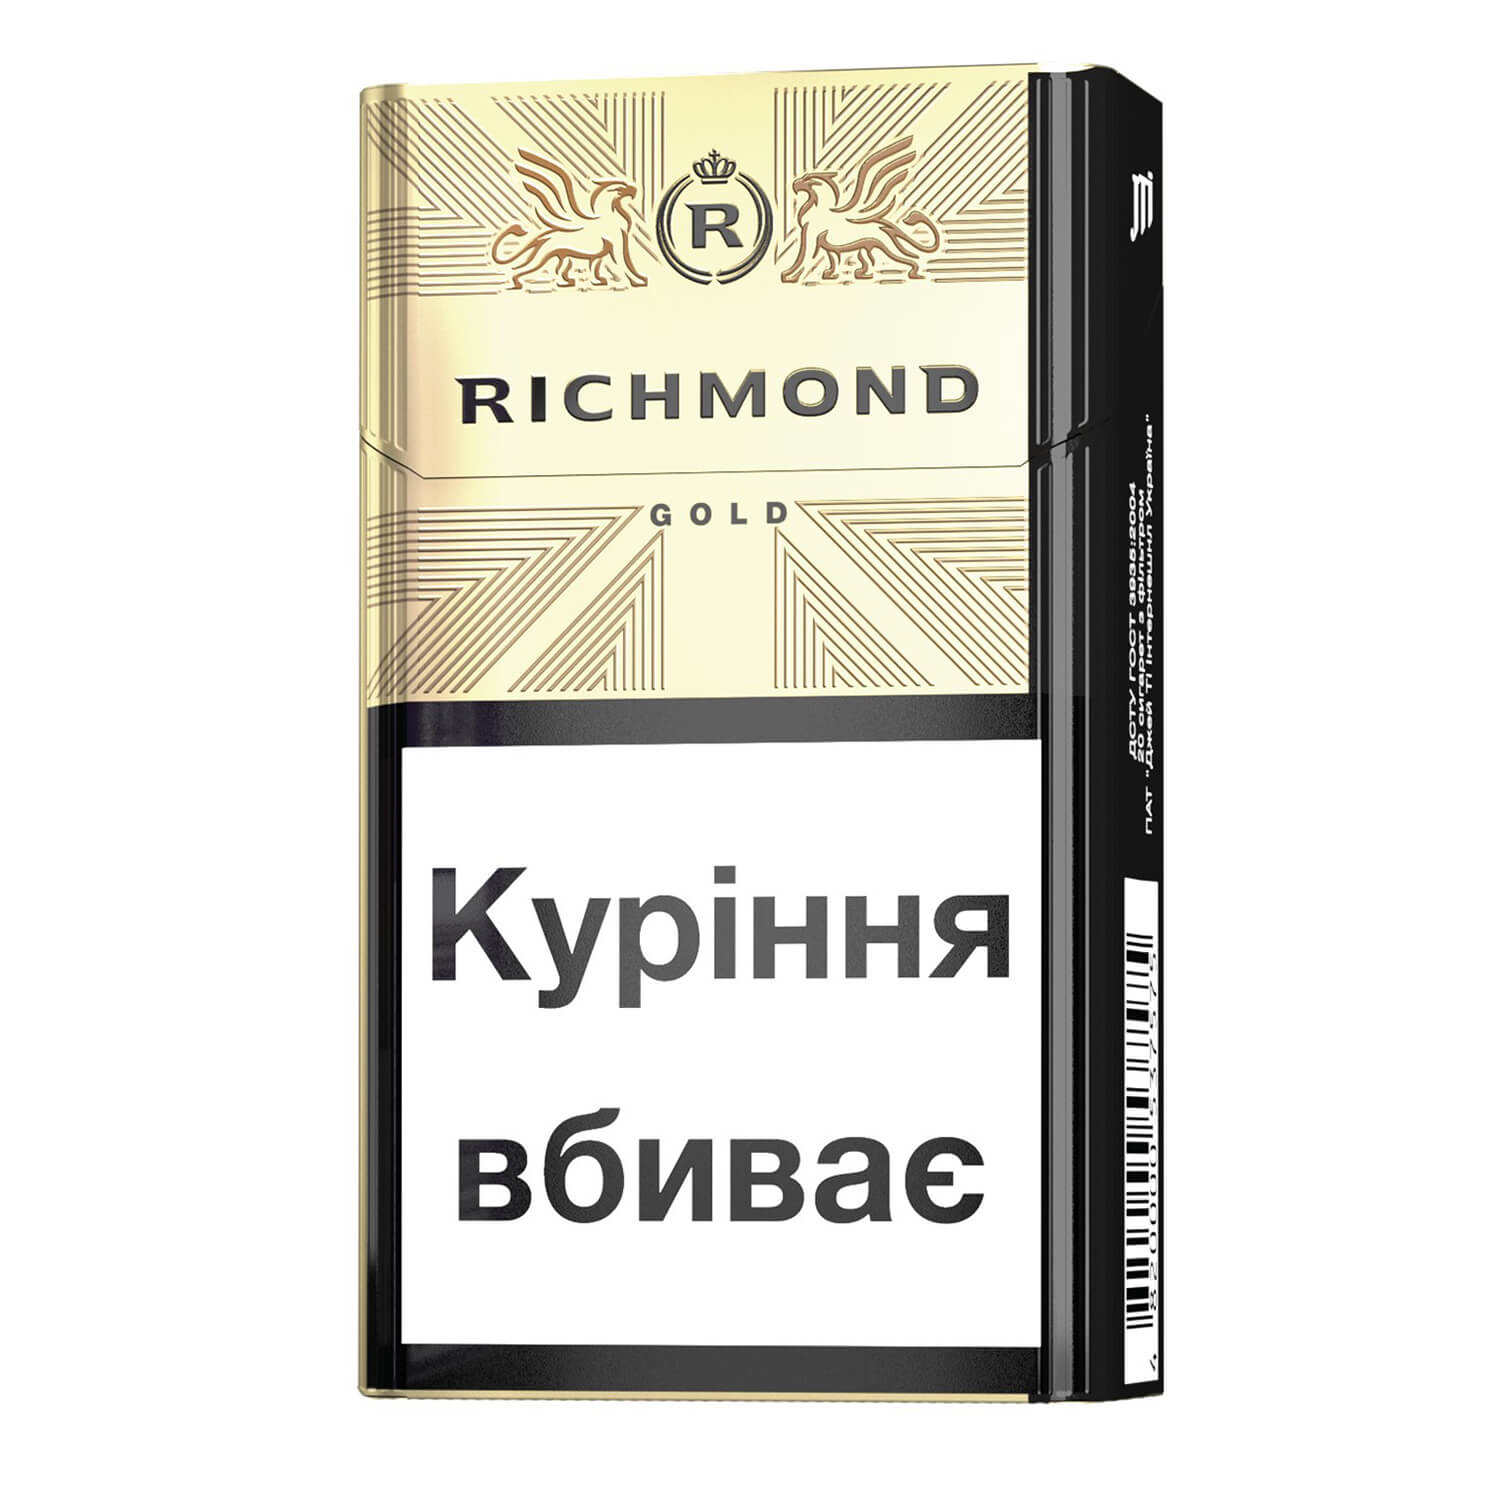 Пачка от сигарет Richmond cherry gold тонкие 